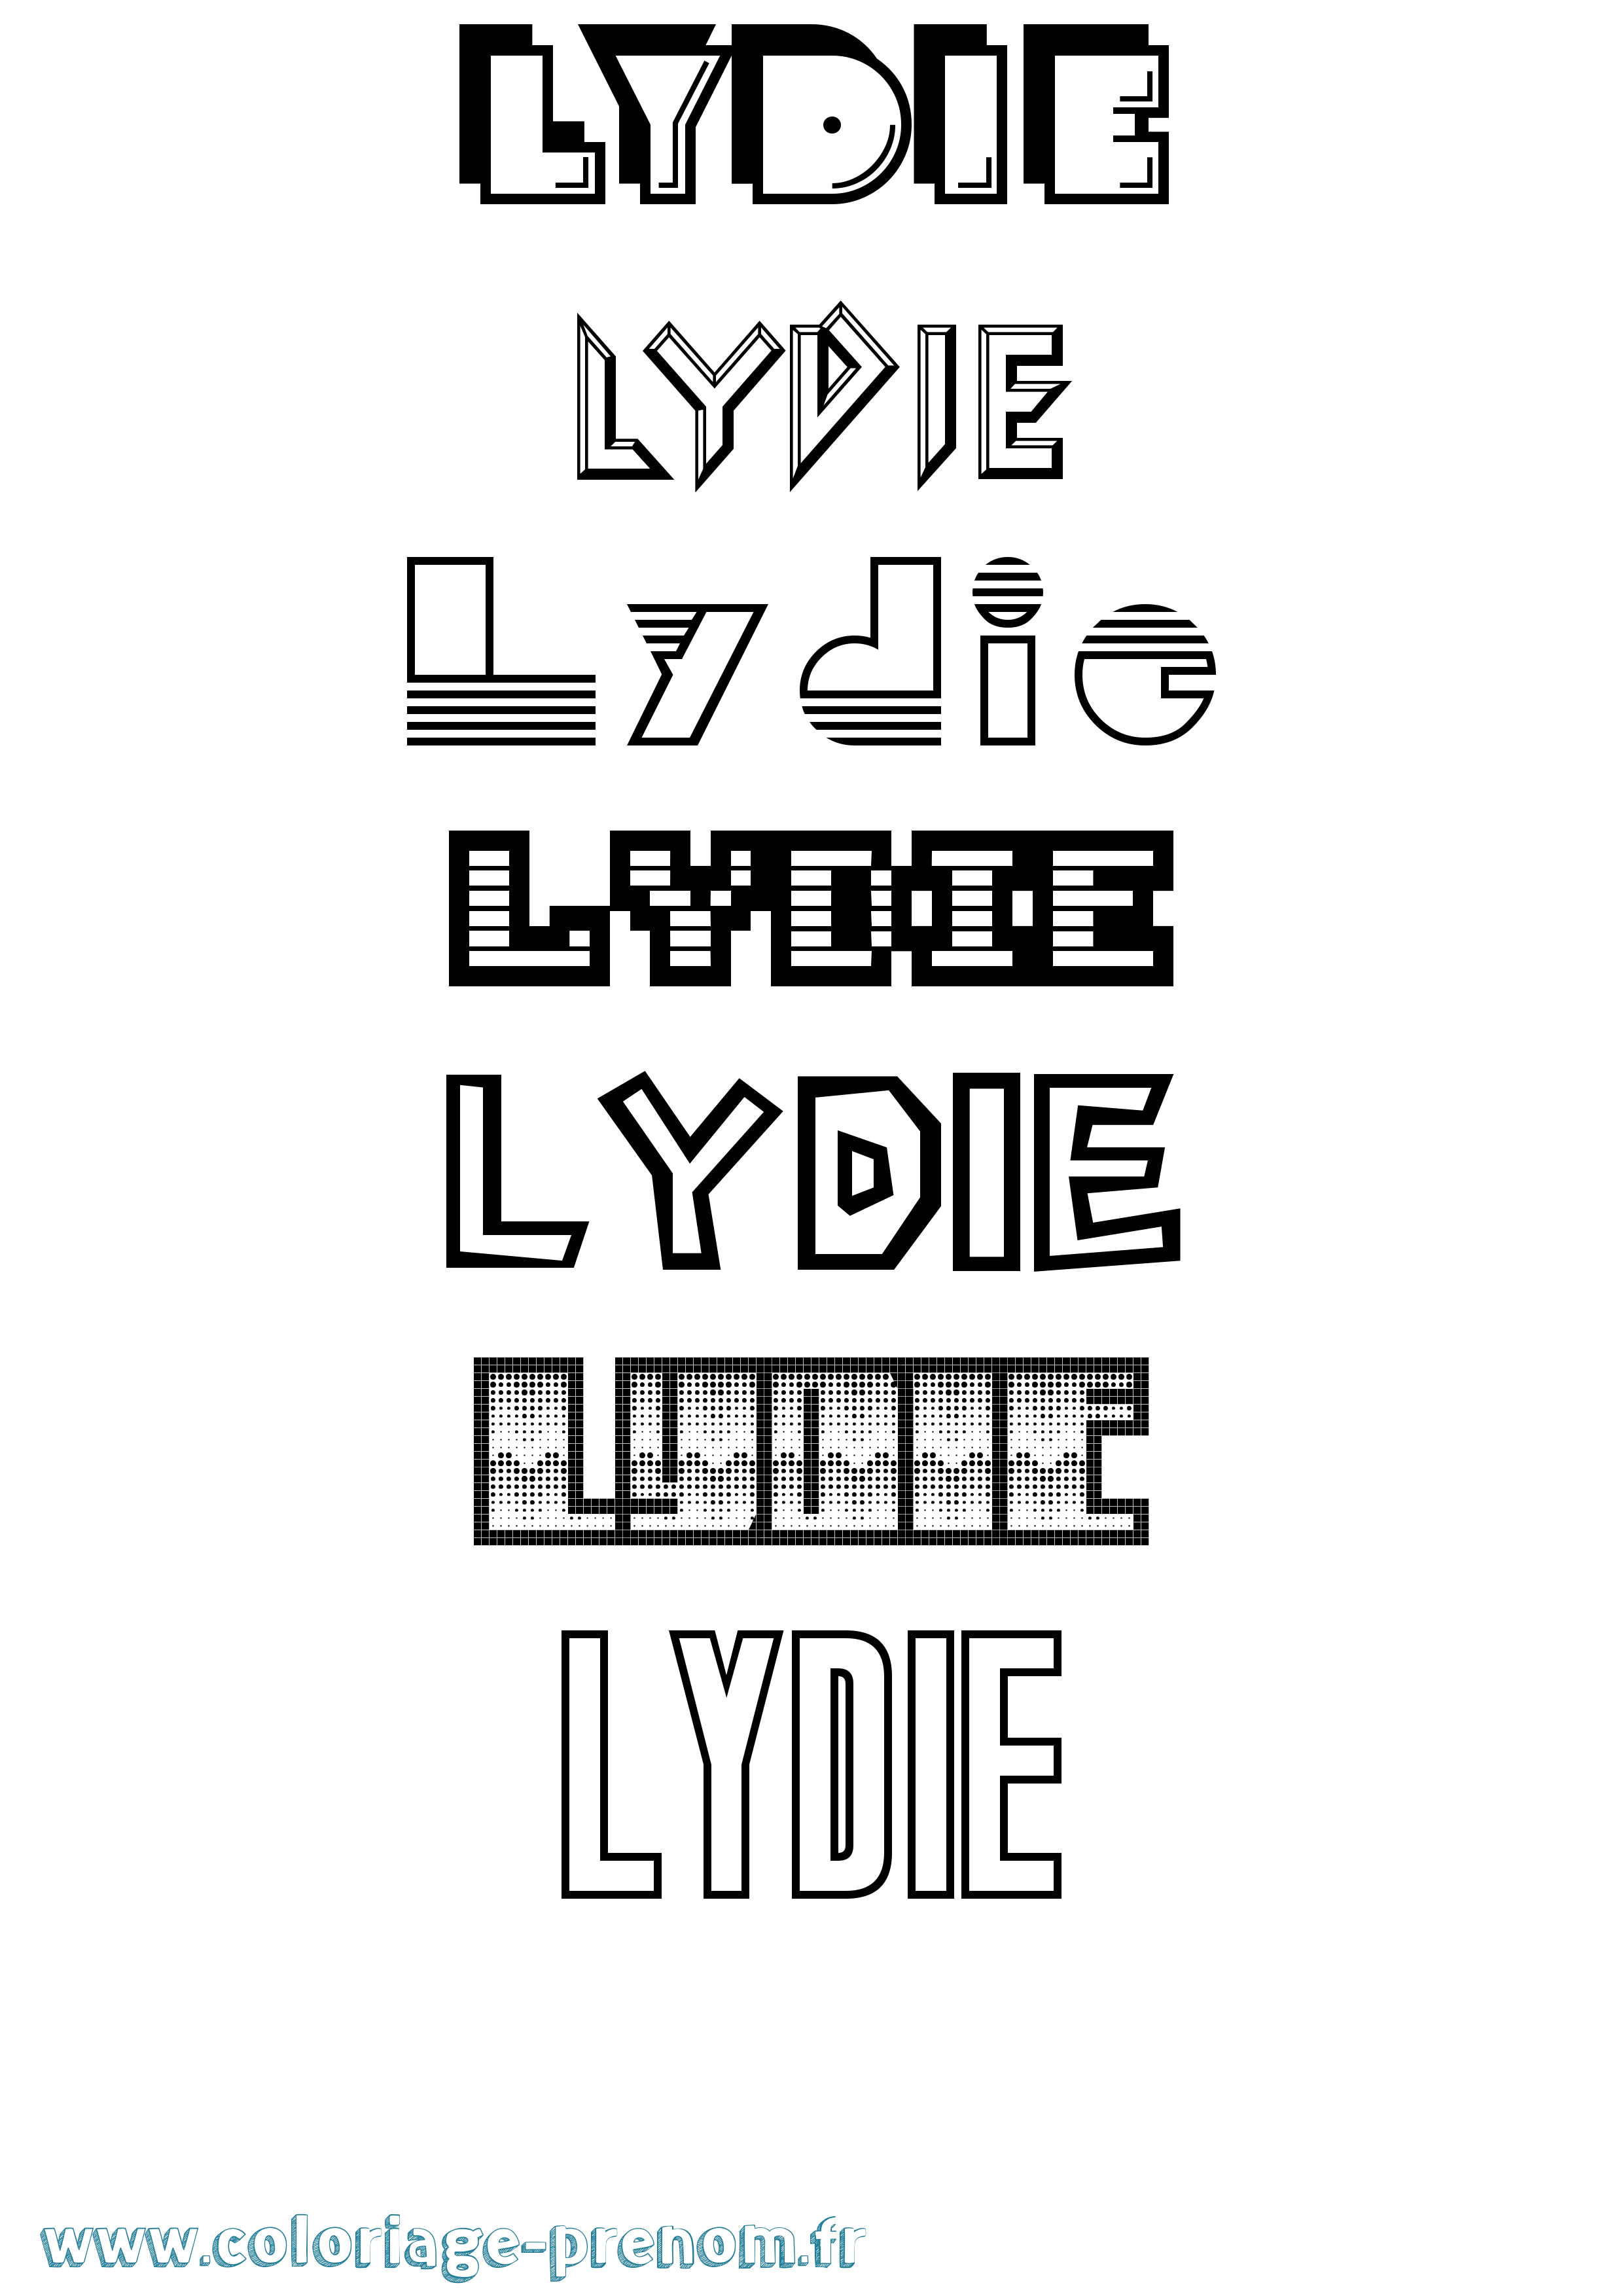 Coloriage prénom Lydie